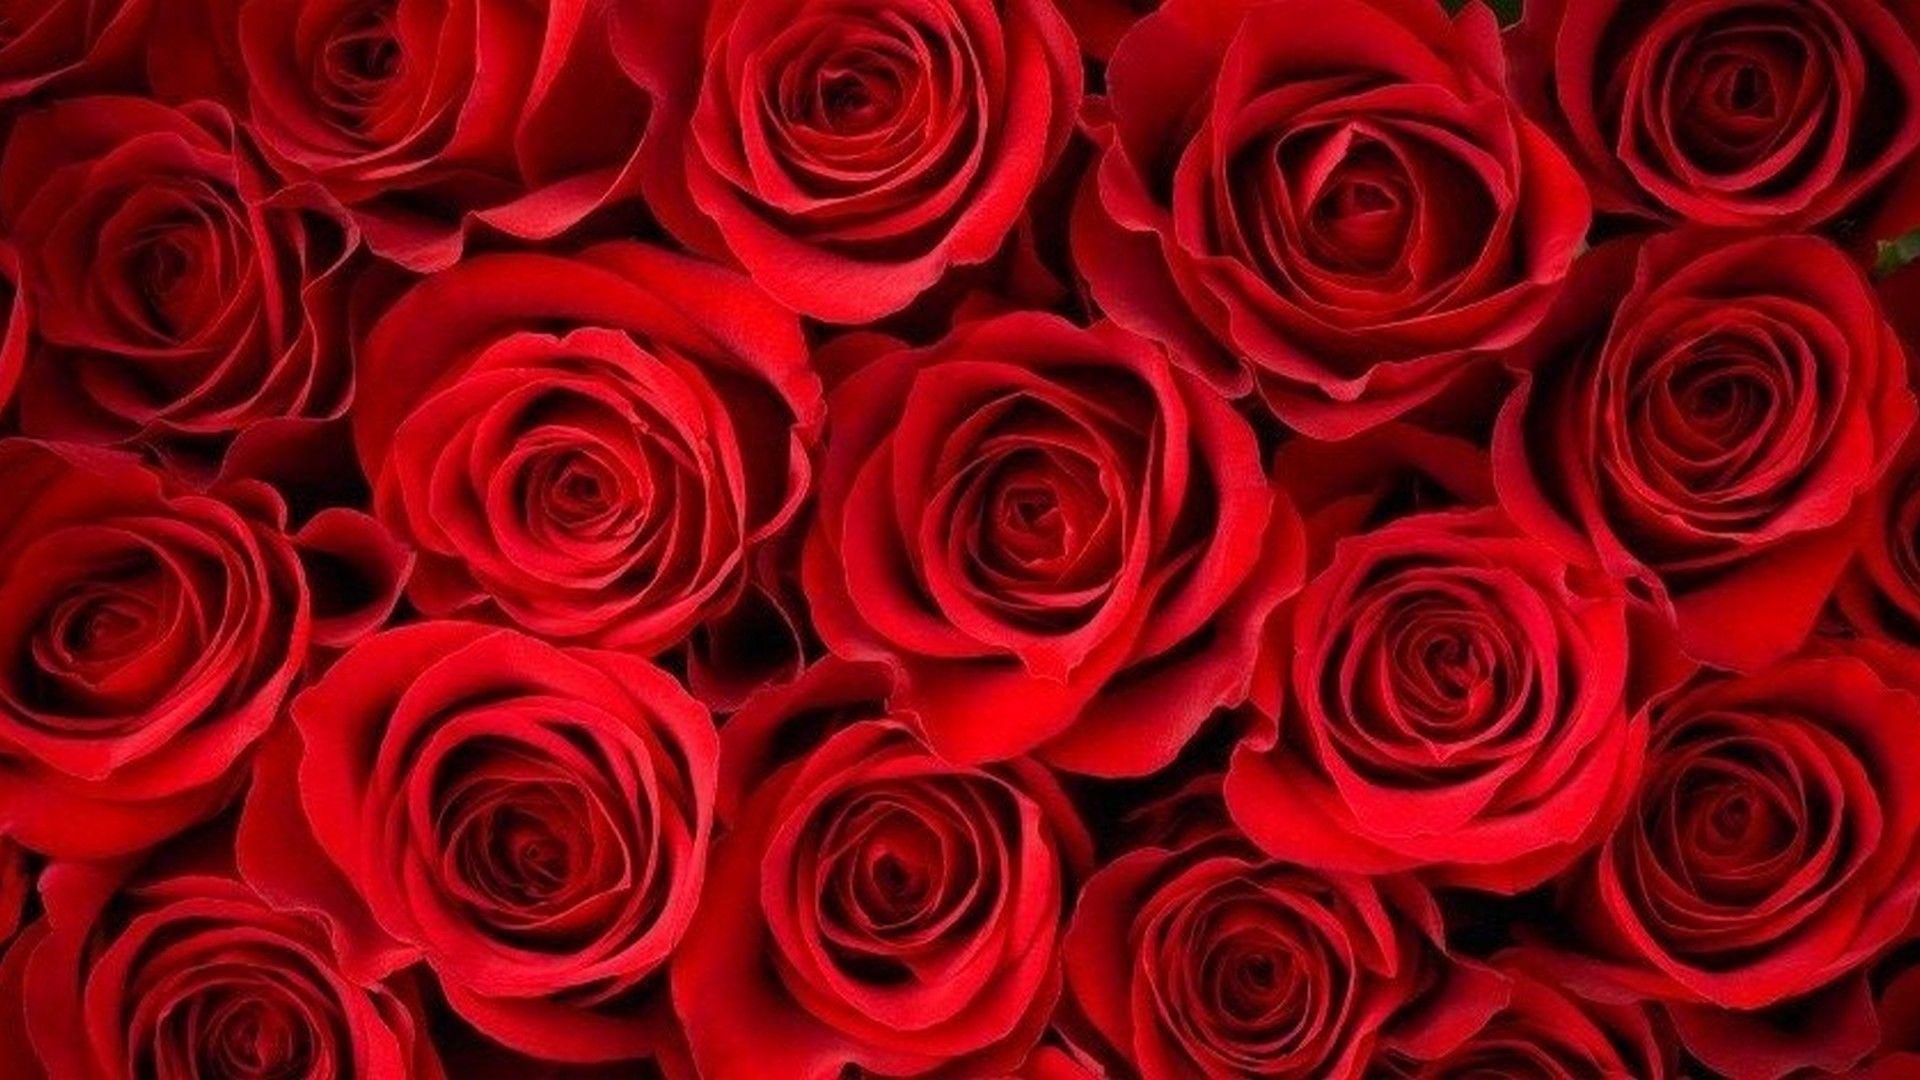 HD Red Rose Wallpaper. Rose background, Rose flower